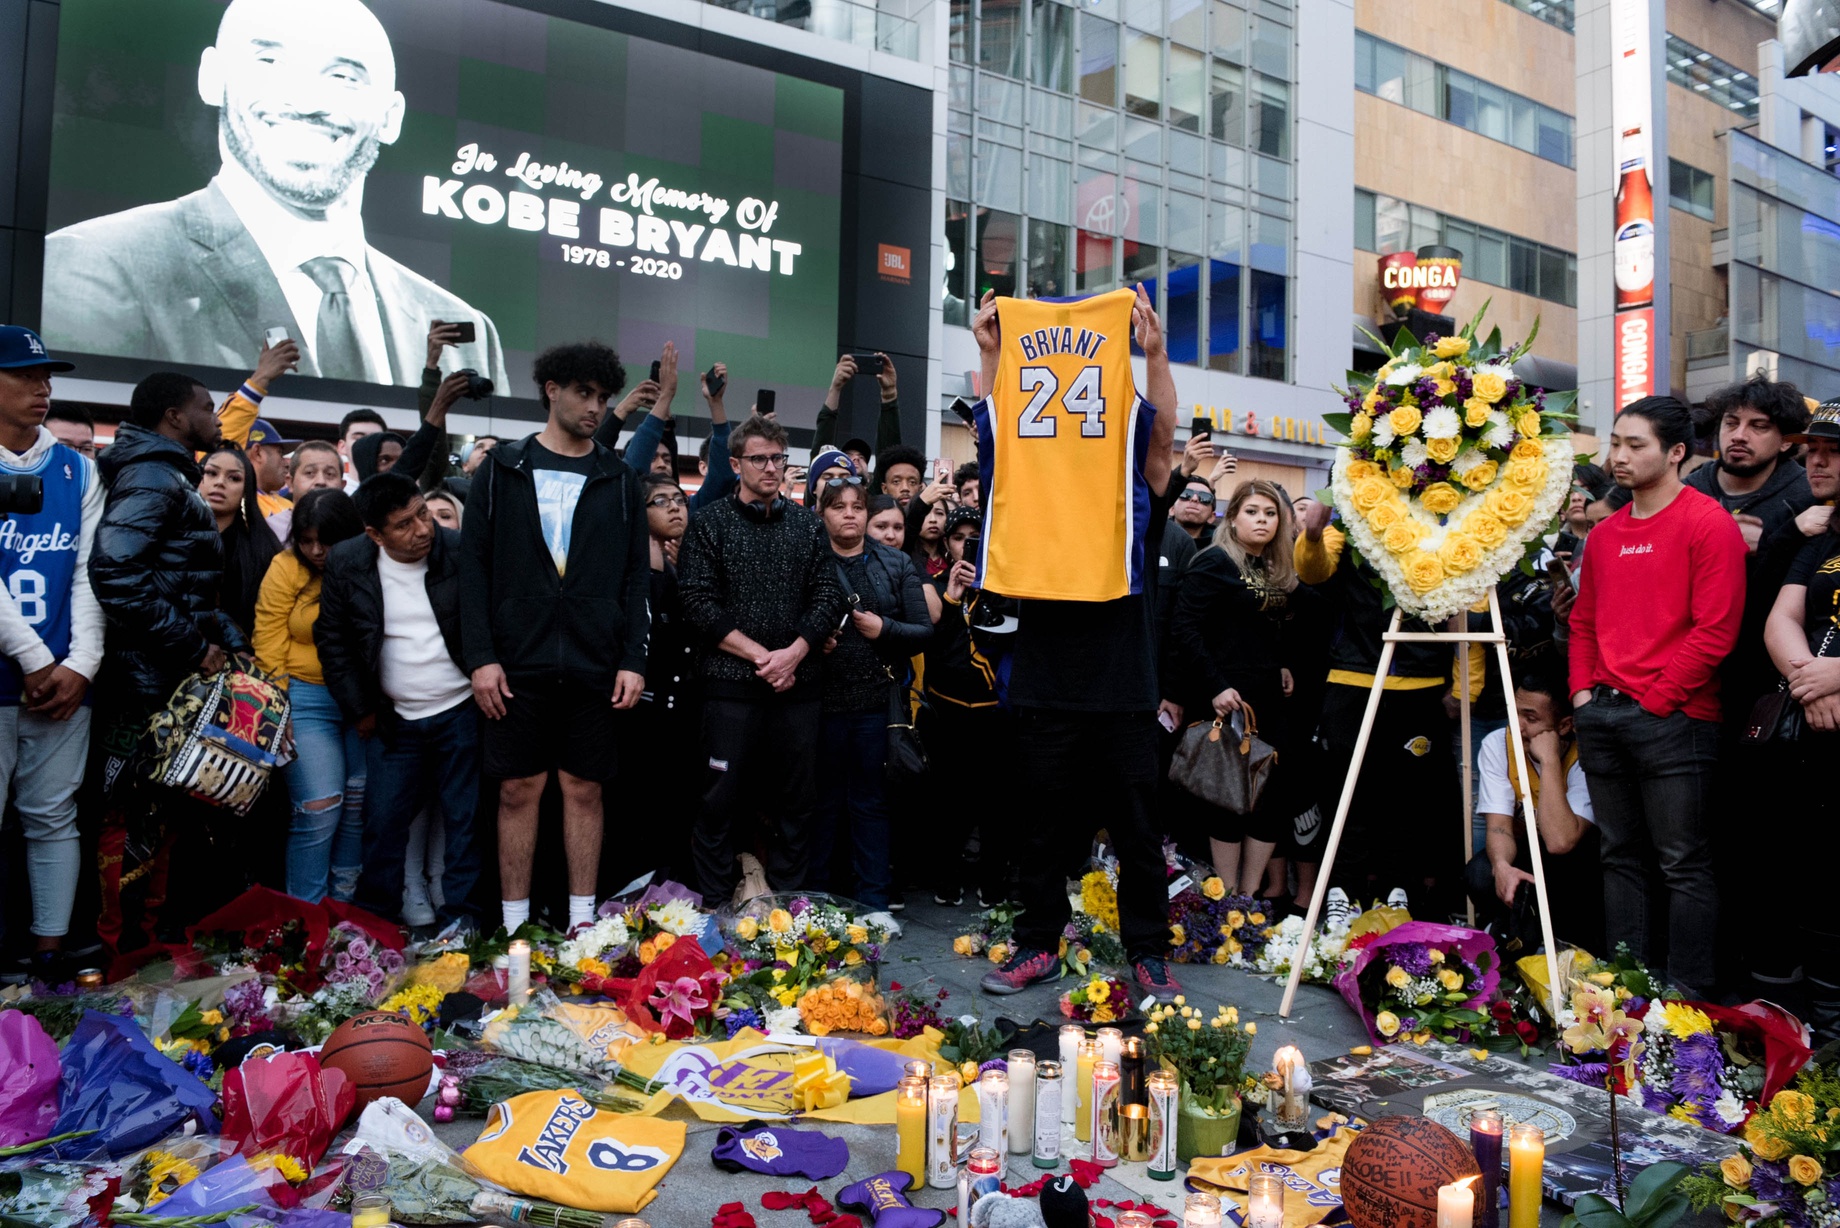 Flipboard: Miami Heat players react to Kobe Bryant's death